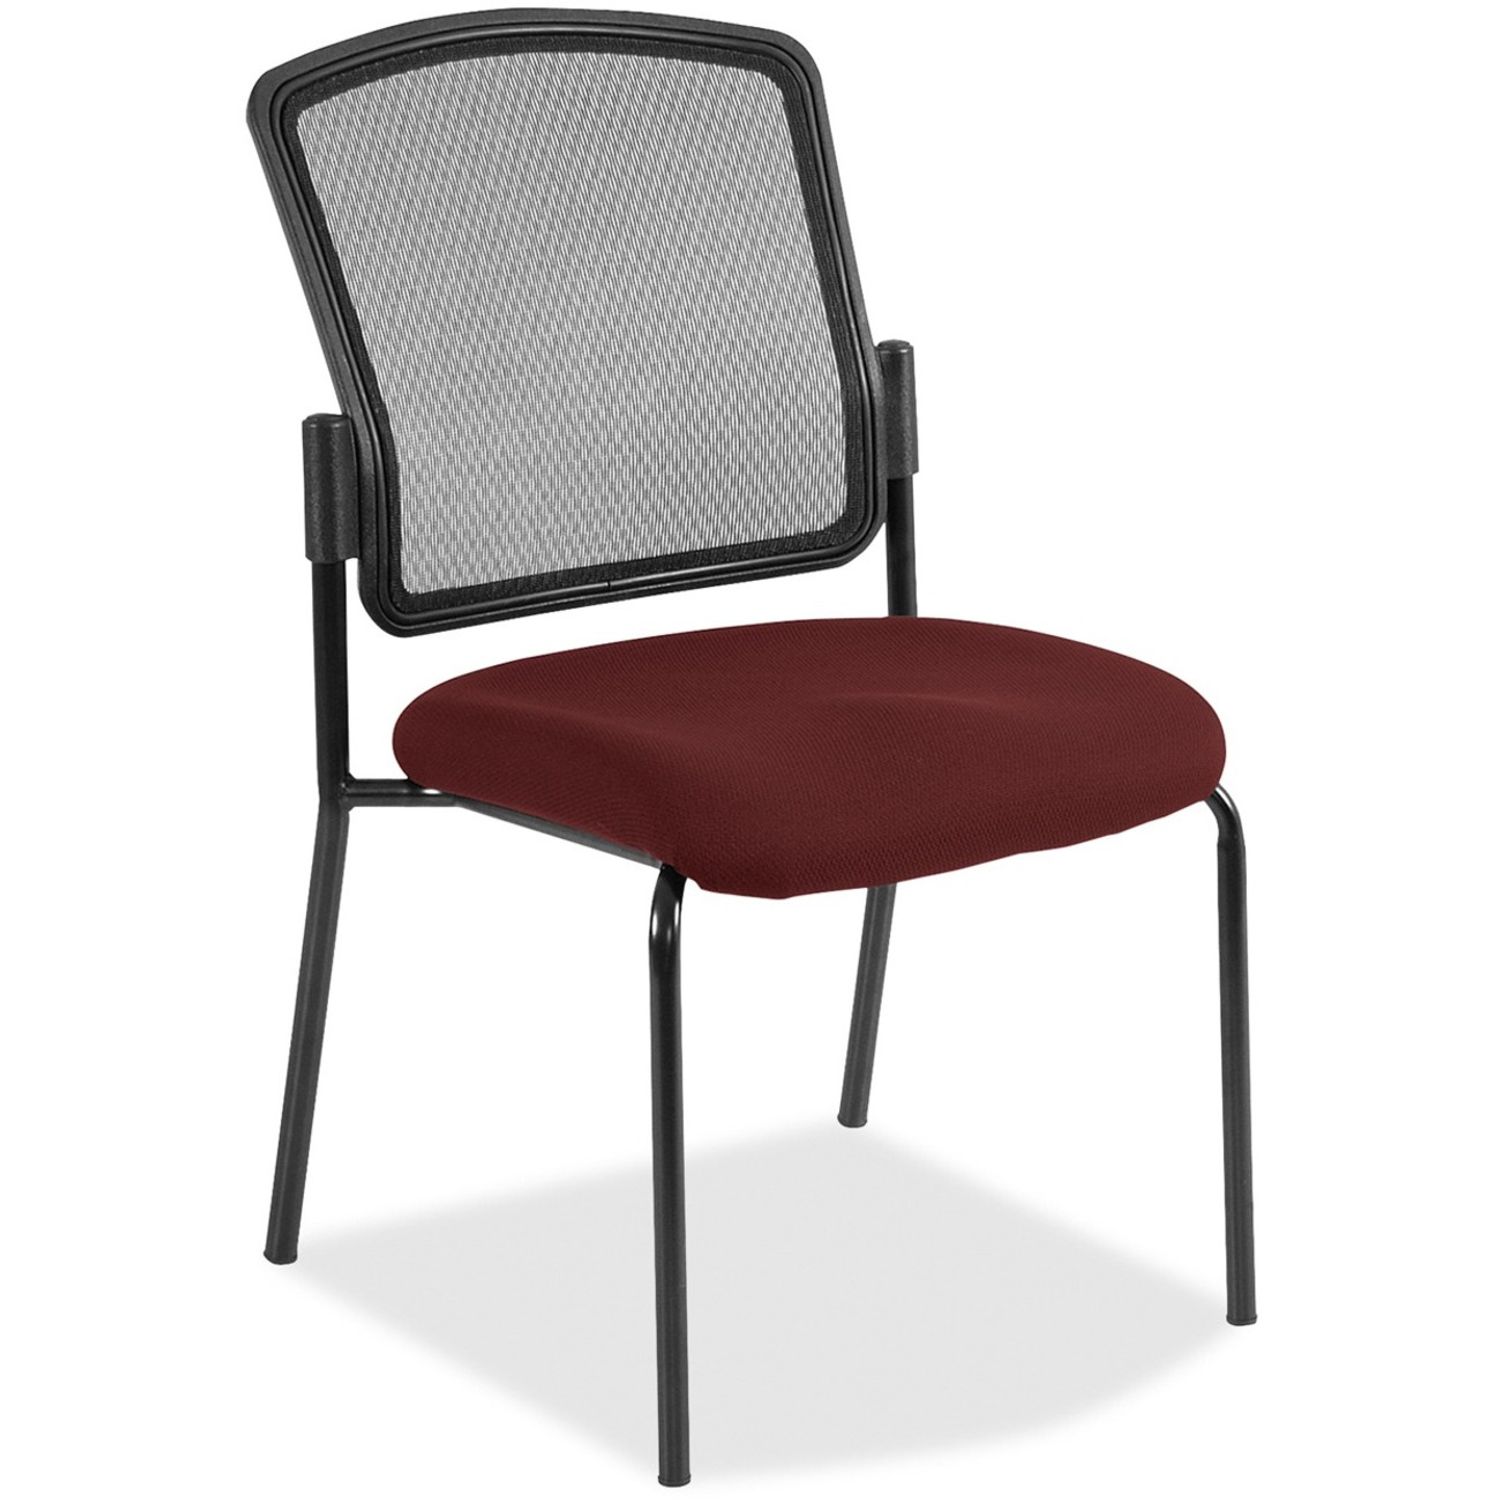 Dakota 2 7014 Guest Chair Port Fabric Seat, Steel Frame, Four-legged Base, 1 Each